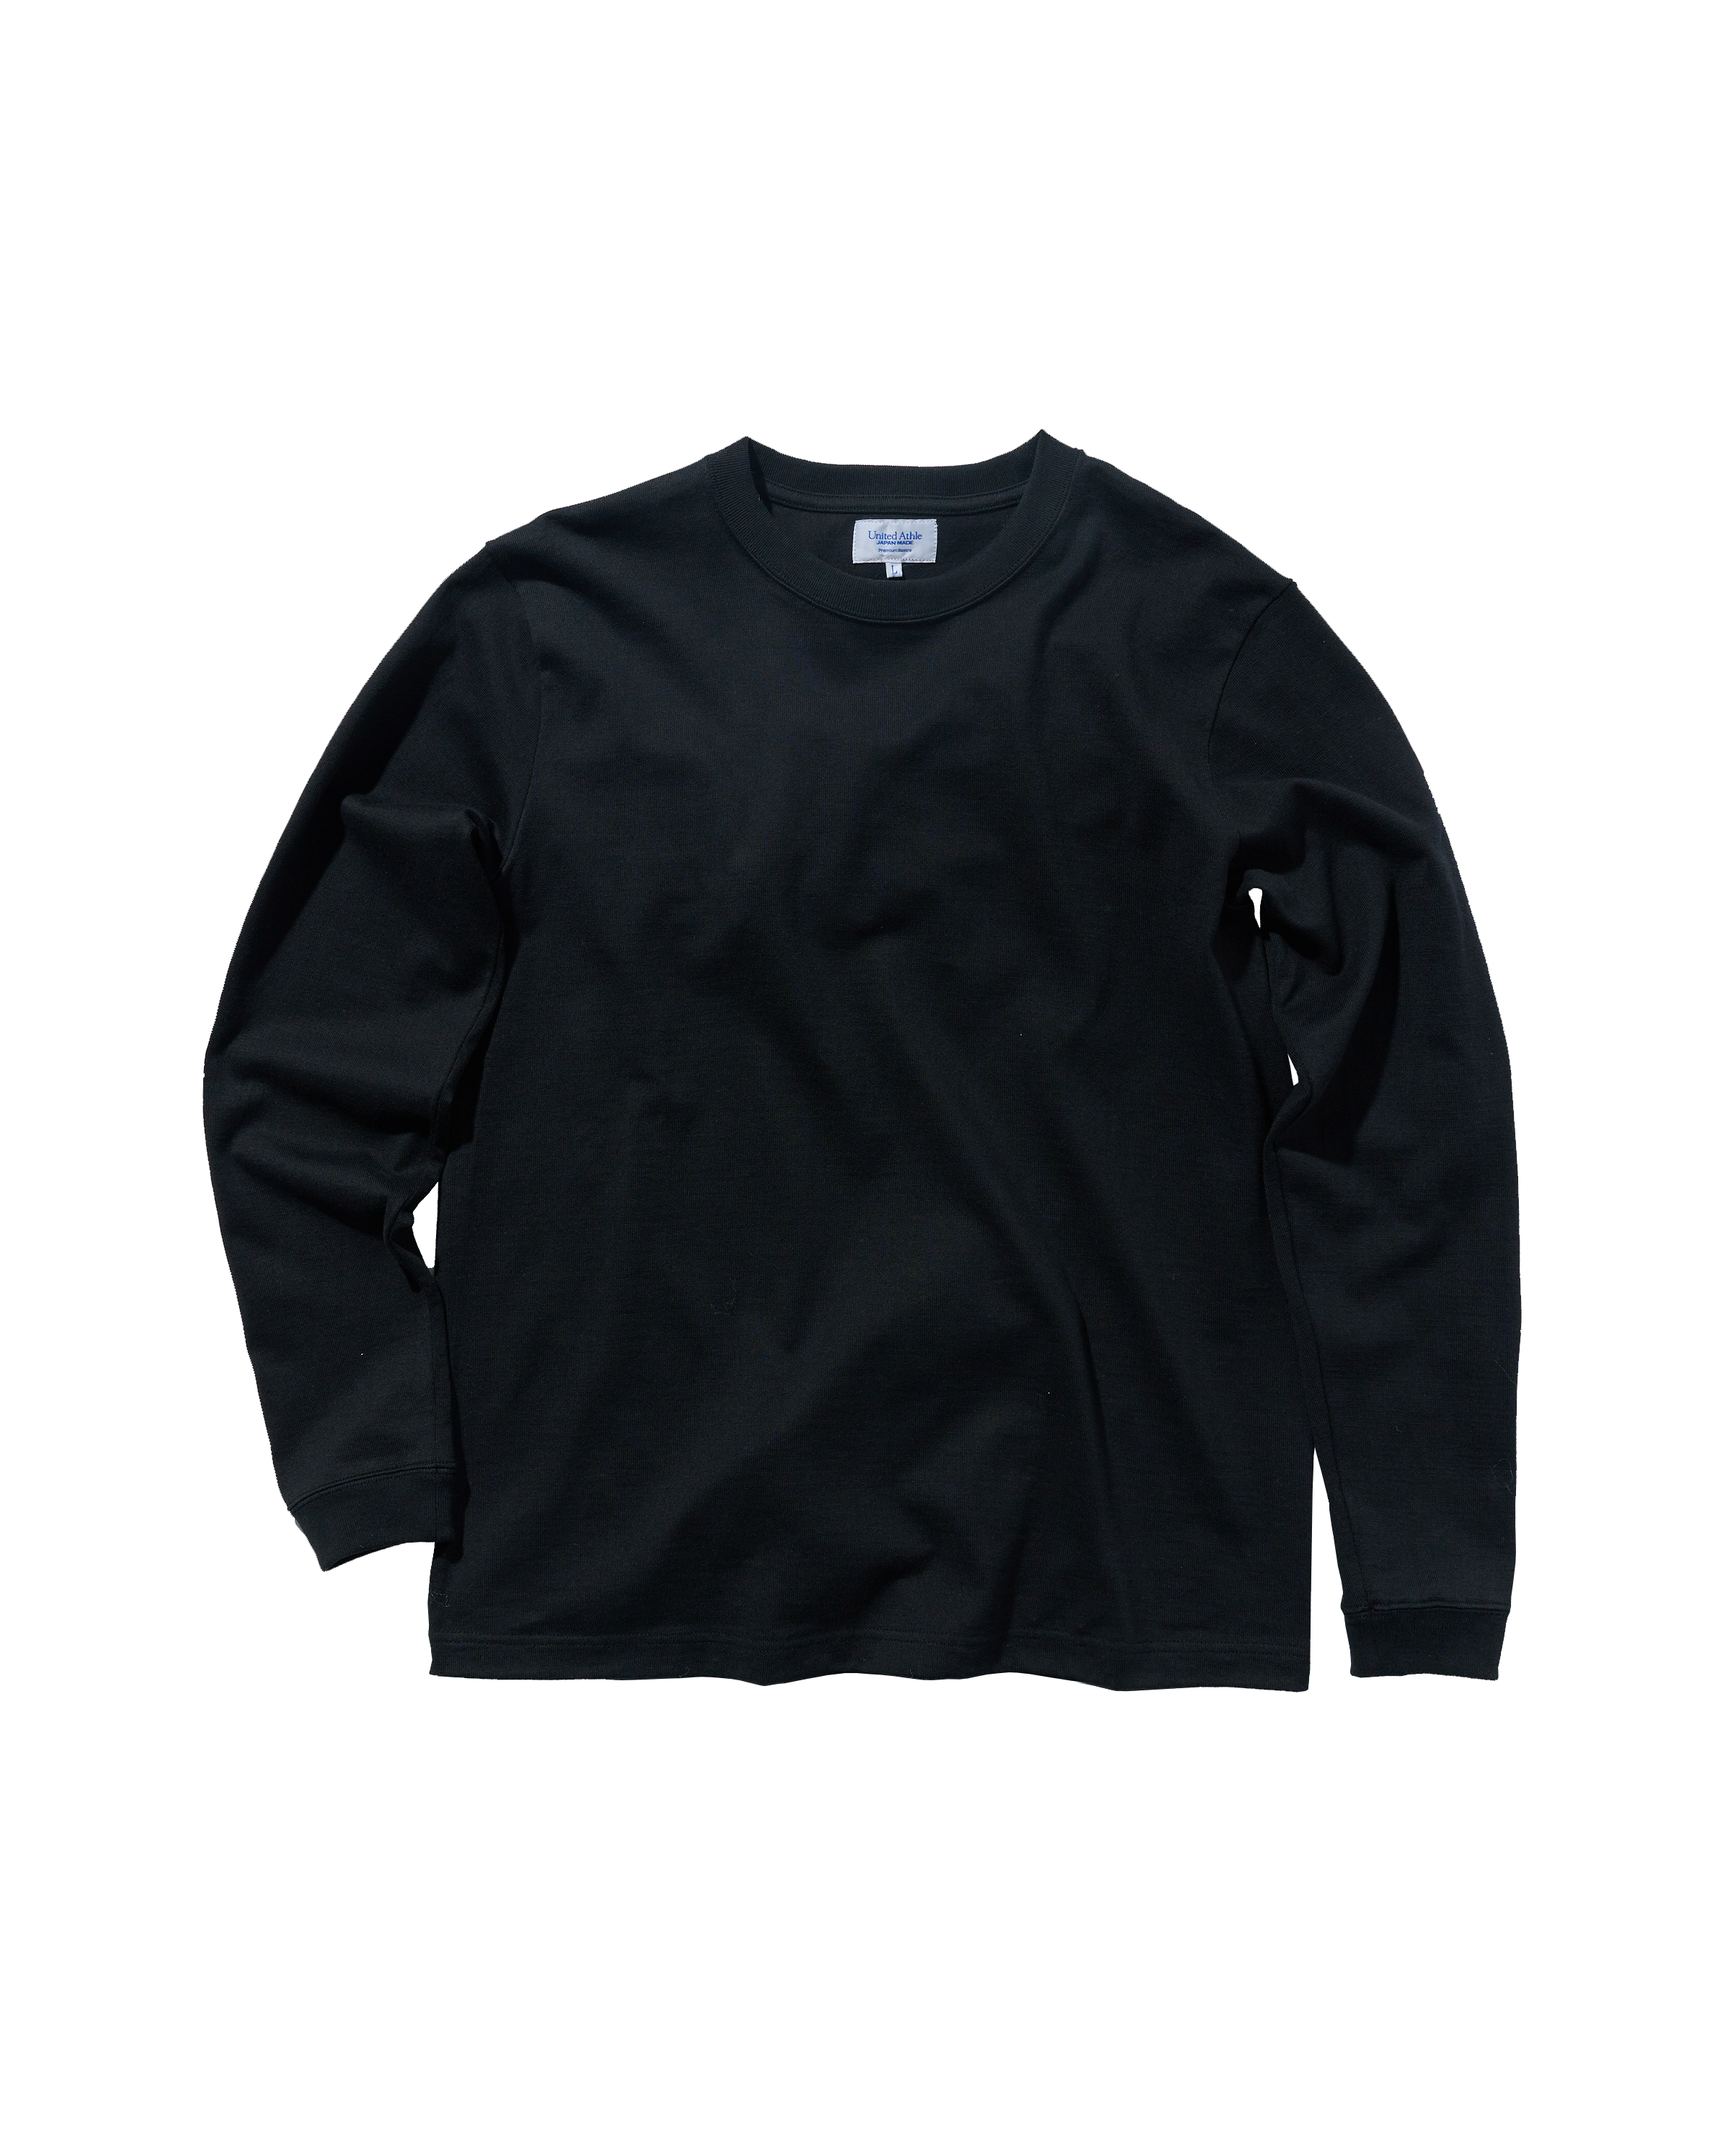 80004 - Japan Made - Standard Fit Long Sleeve T-shirt - Black x 1